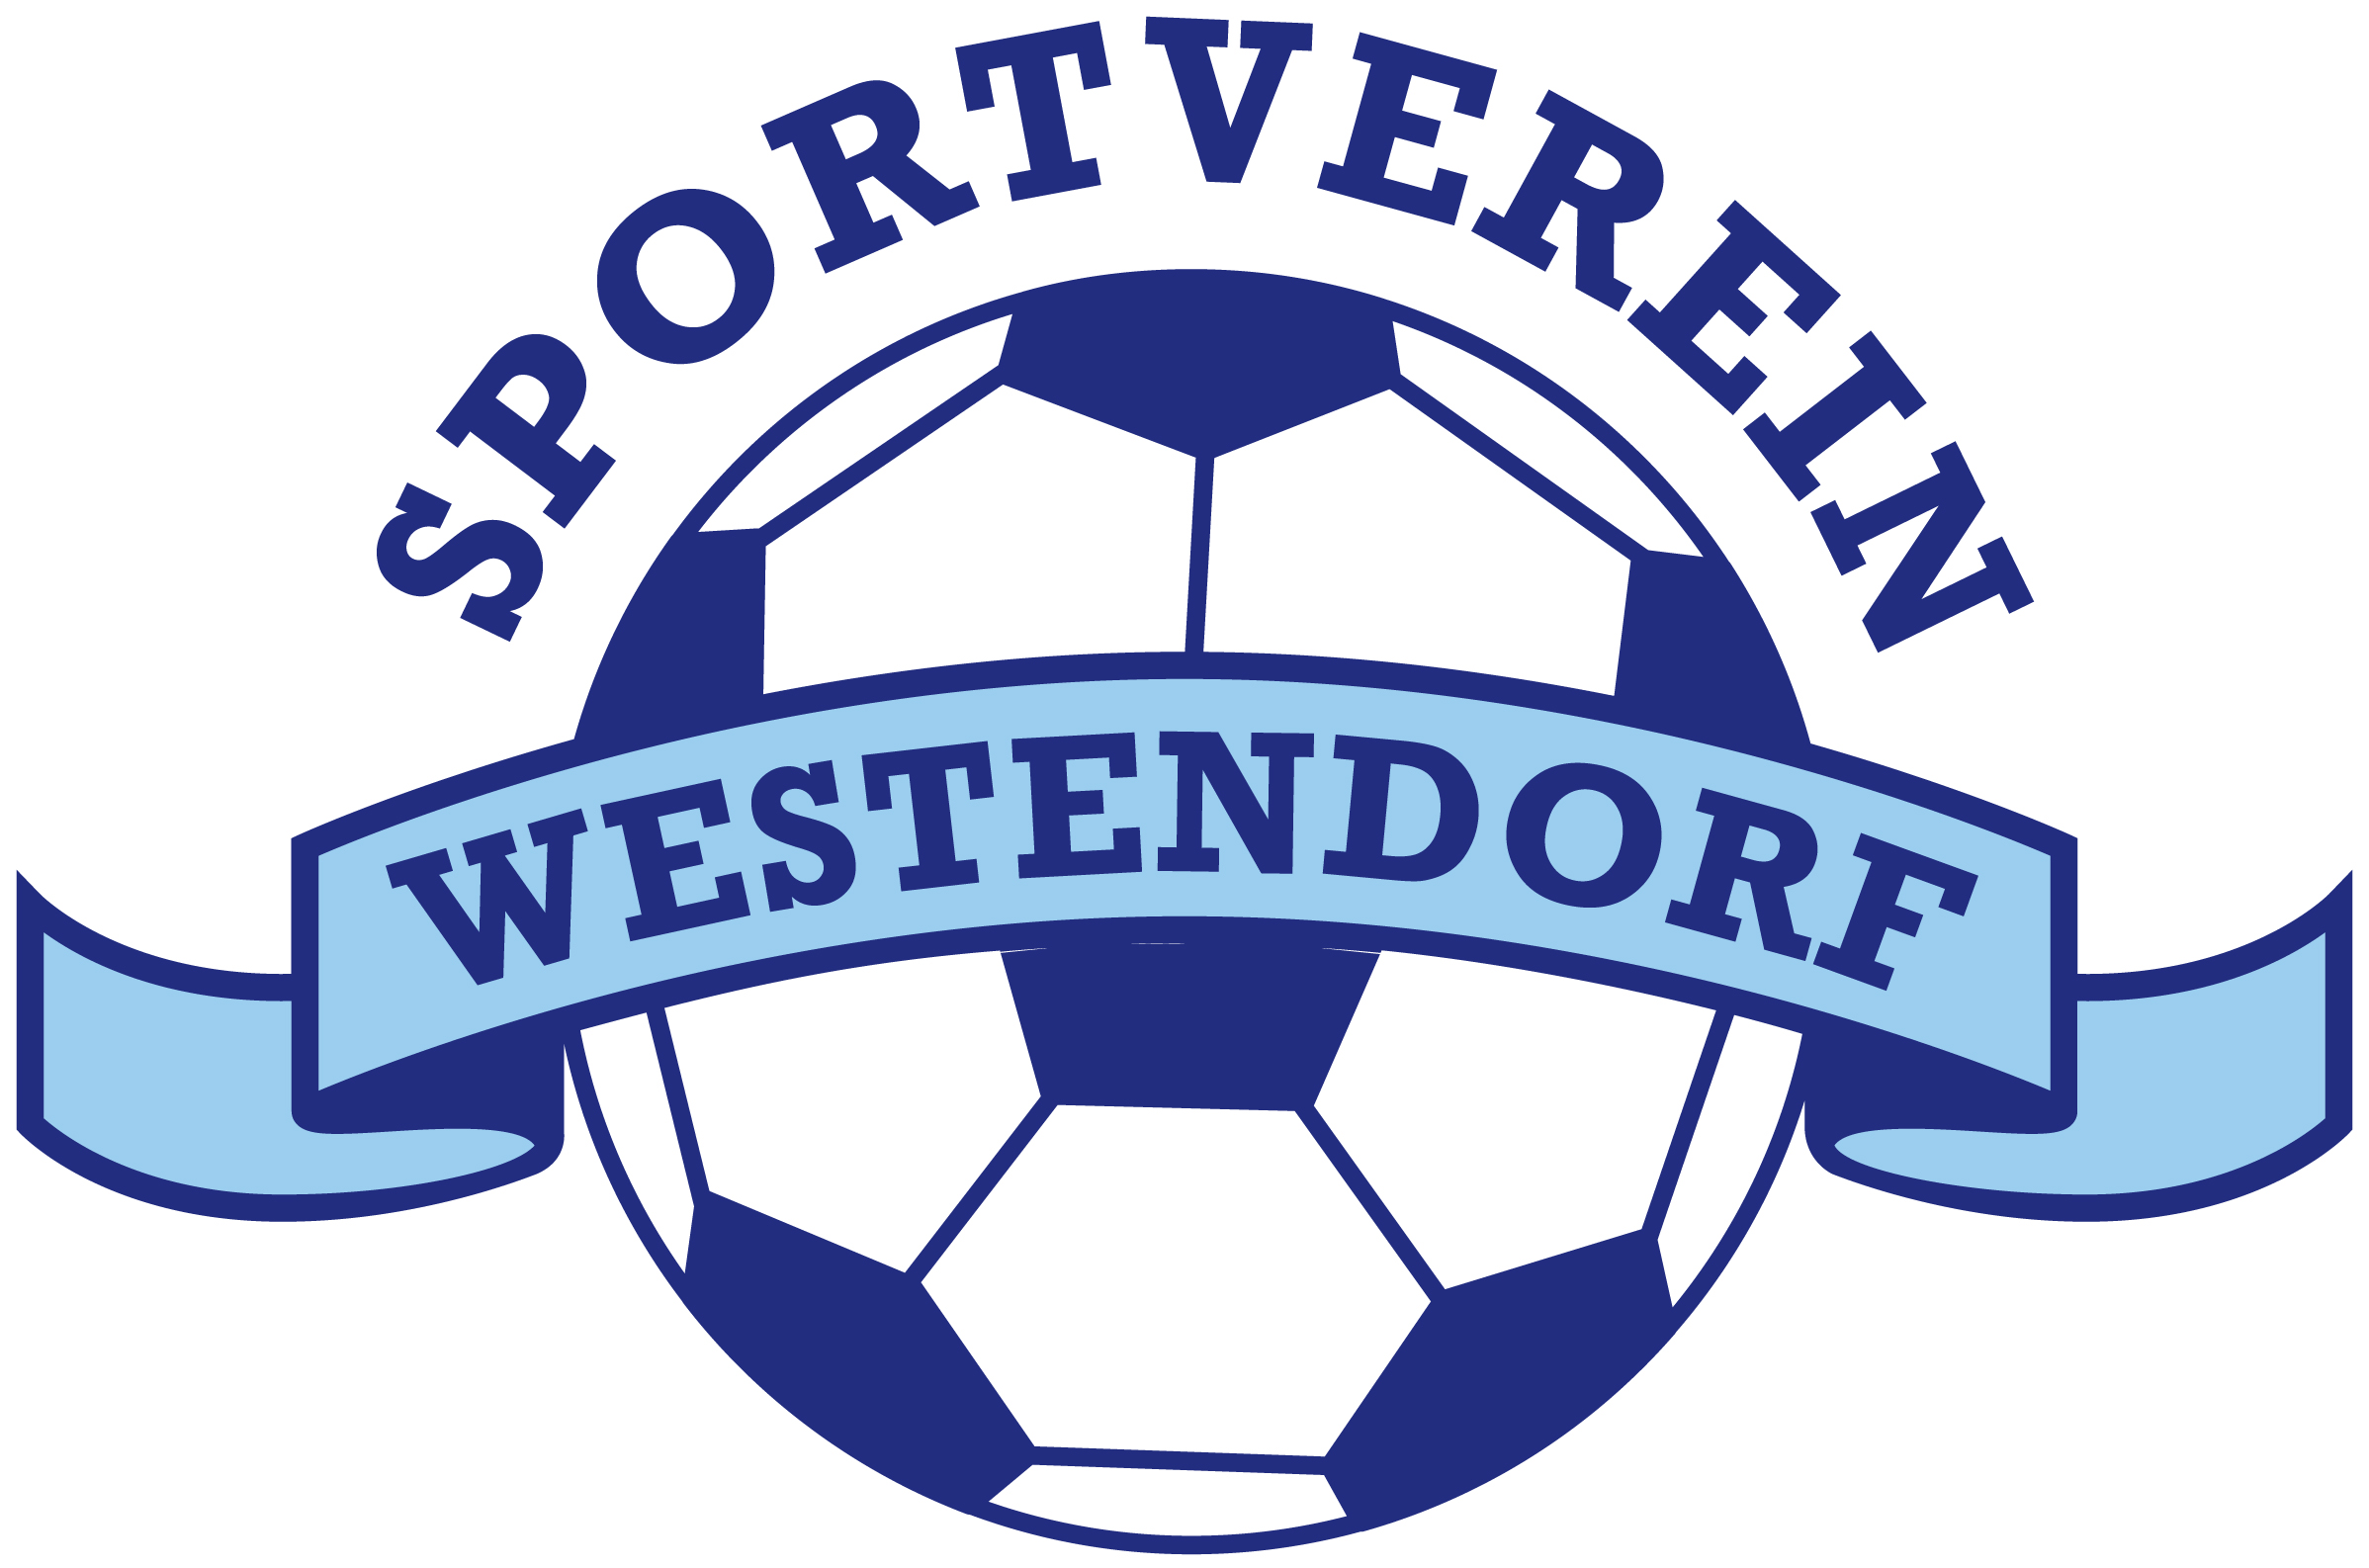 SV Immobilien Oberlechner Westendorf Logo